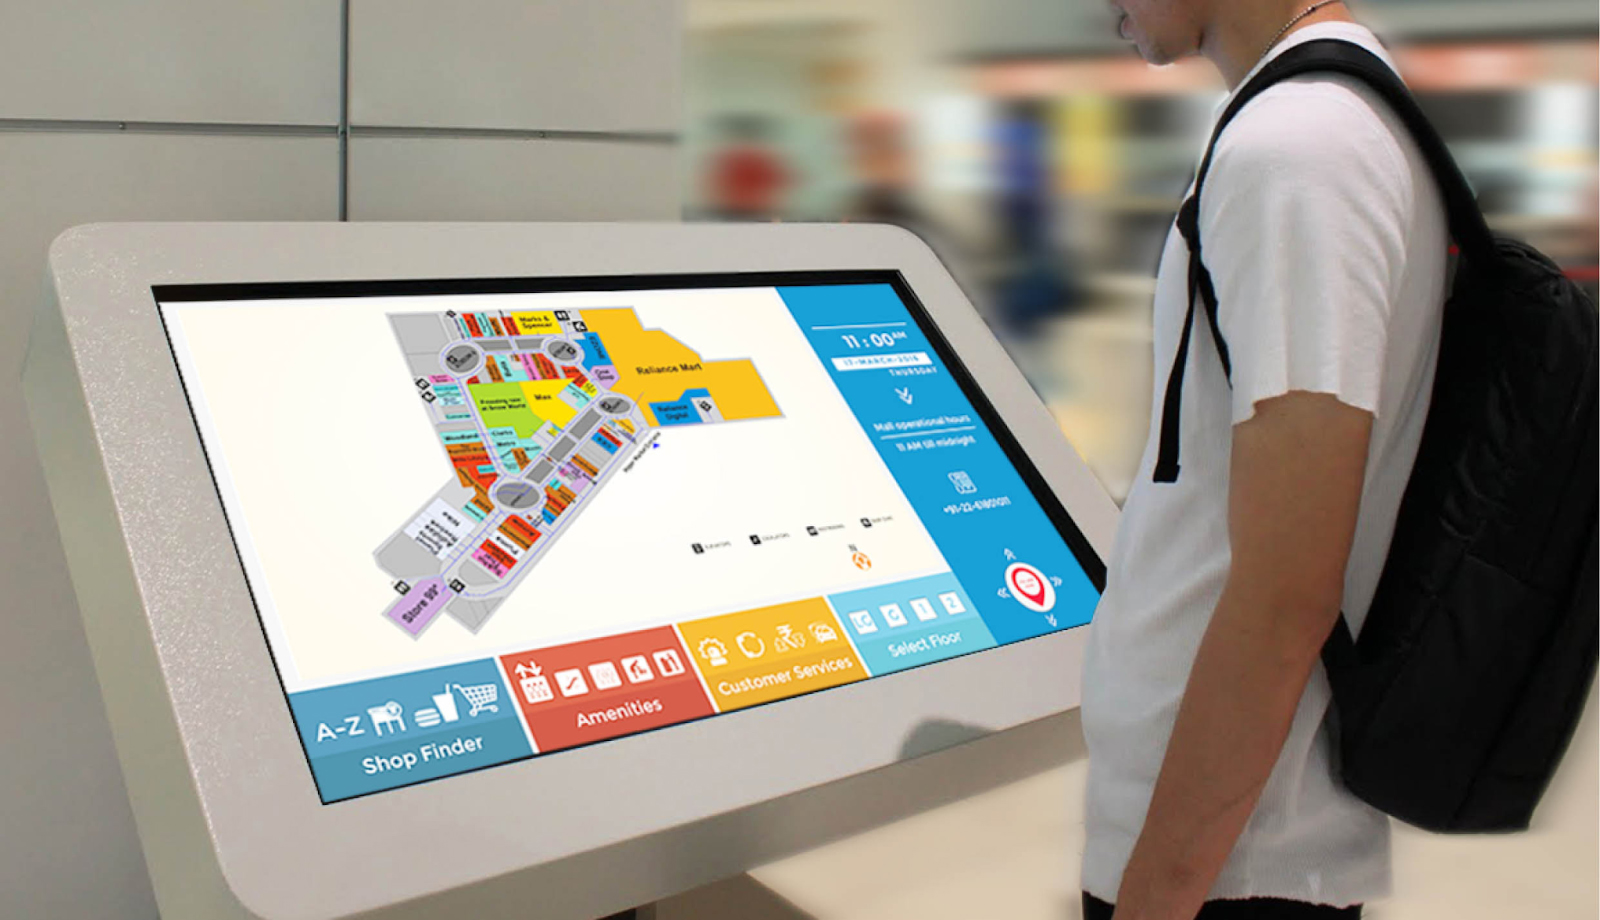 A shopper reviews a mall map on a freestanding digital display.